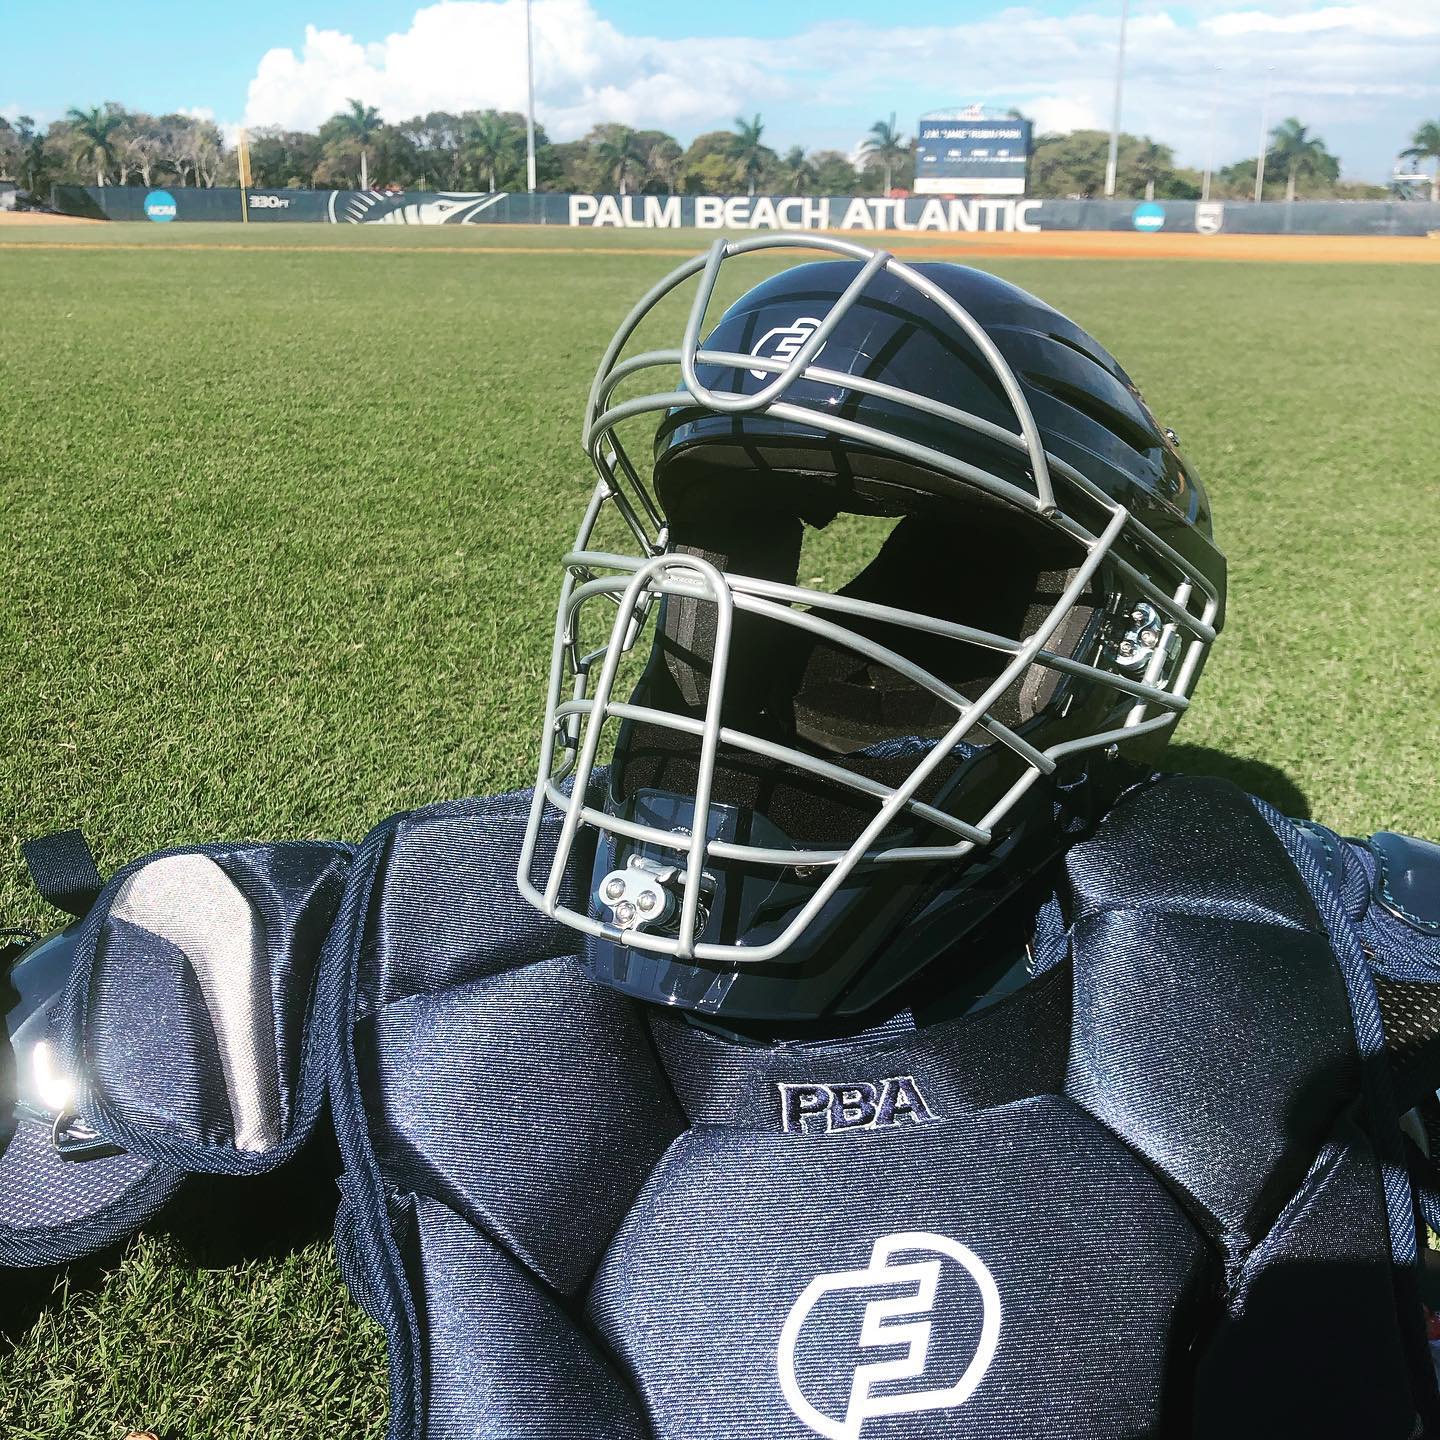 Force3 Hockey Style Defender Catcher's Helmet: BD22 – Diamond Sport Gear